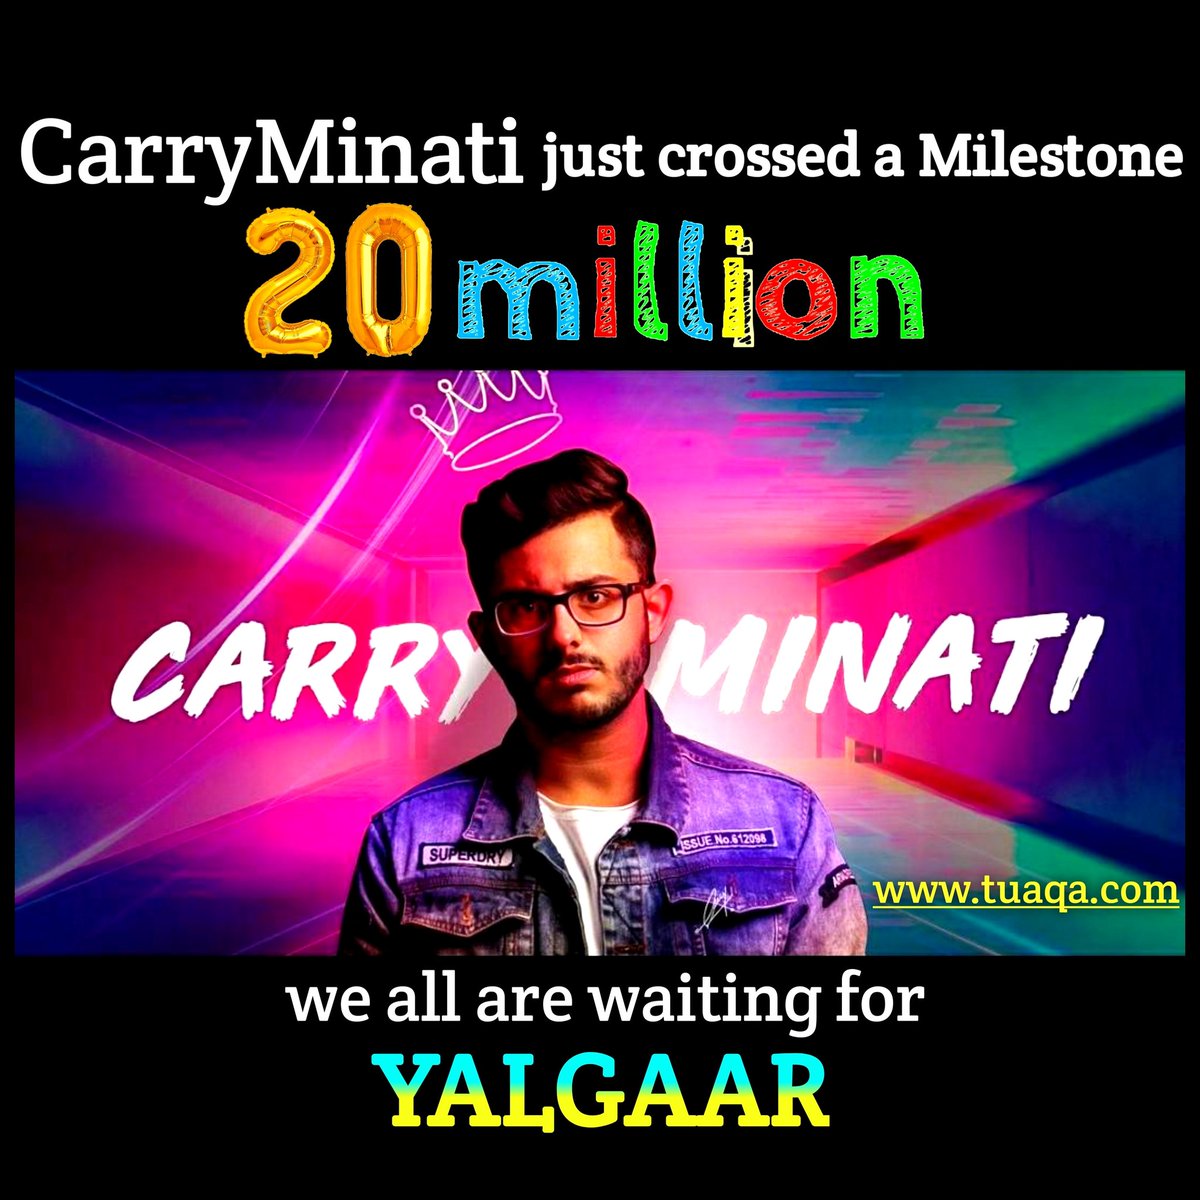 Carry bhai Love You ❤️❤️ & Congratulations Bhai❤️❤️❤️

#carryminatitiktokroast #carryminnati #carryminatiroast #CARRY #YouTuber #YoutubeVsTikTok #20Mforcarryminati #ashishchanchlani #BBkiVines #Roast